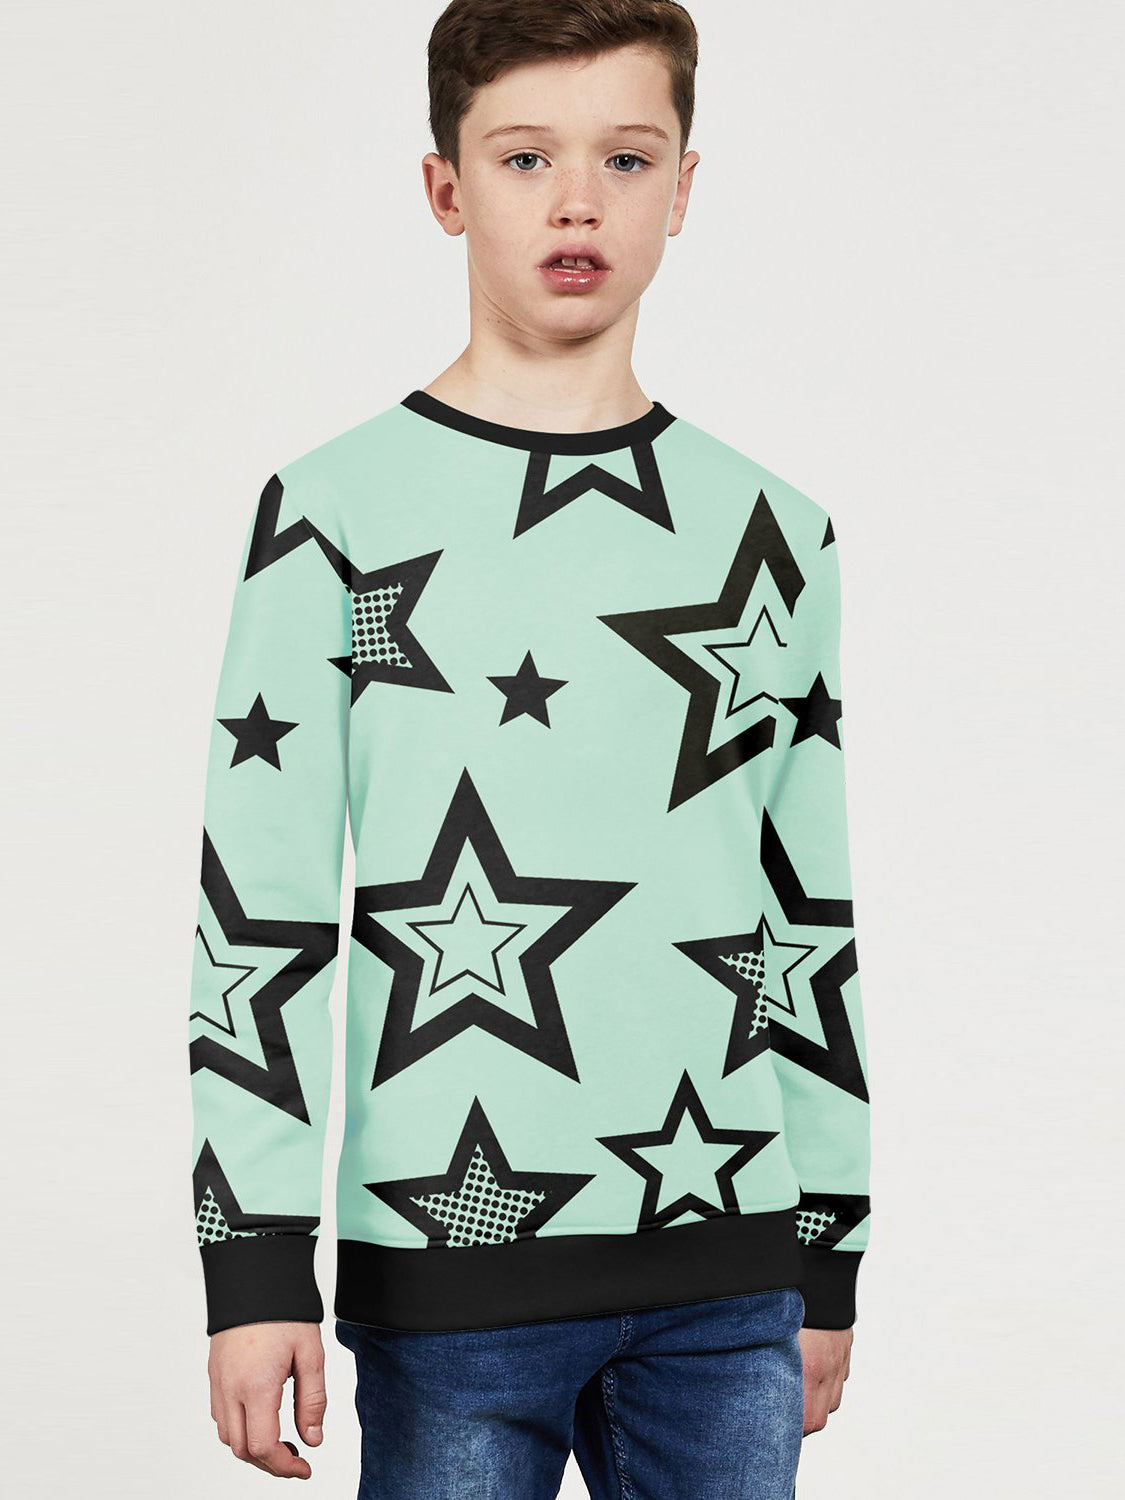 Zara baby Terry Fleece Sweatshirt For Kids-Cyan Green with Stars Print-SP146